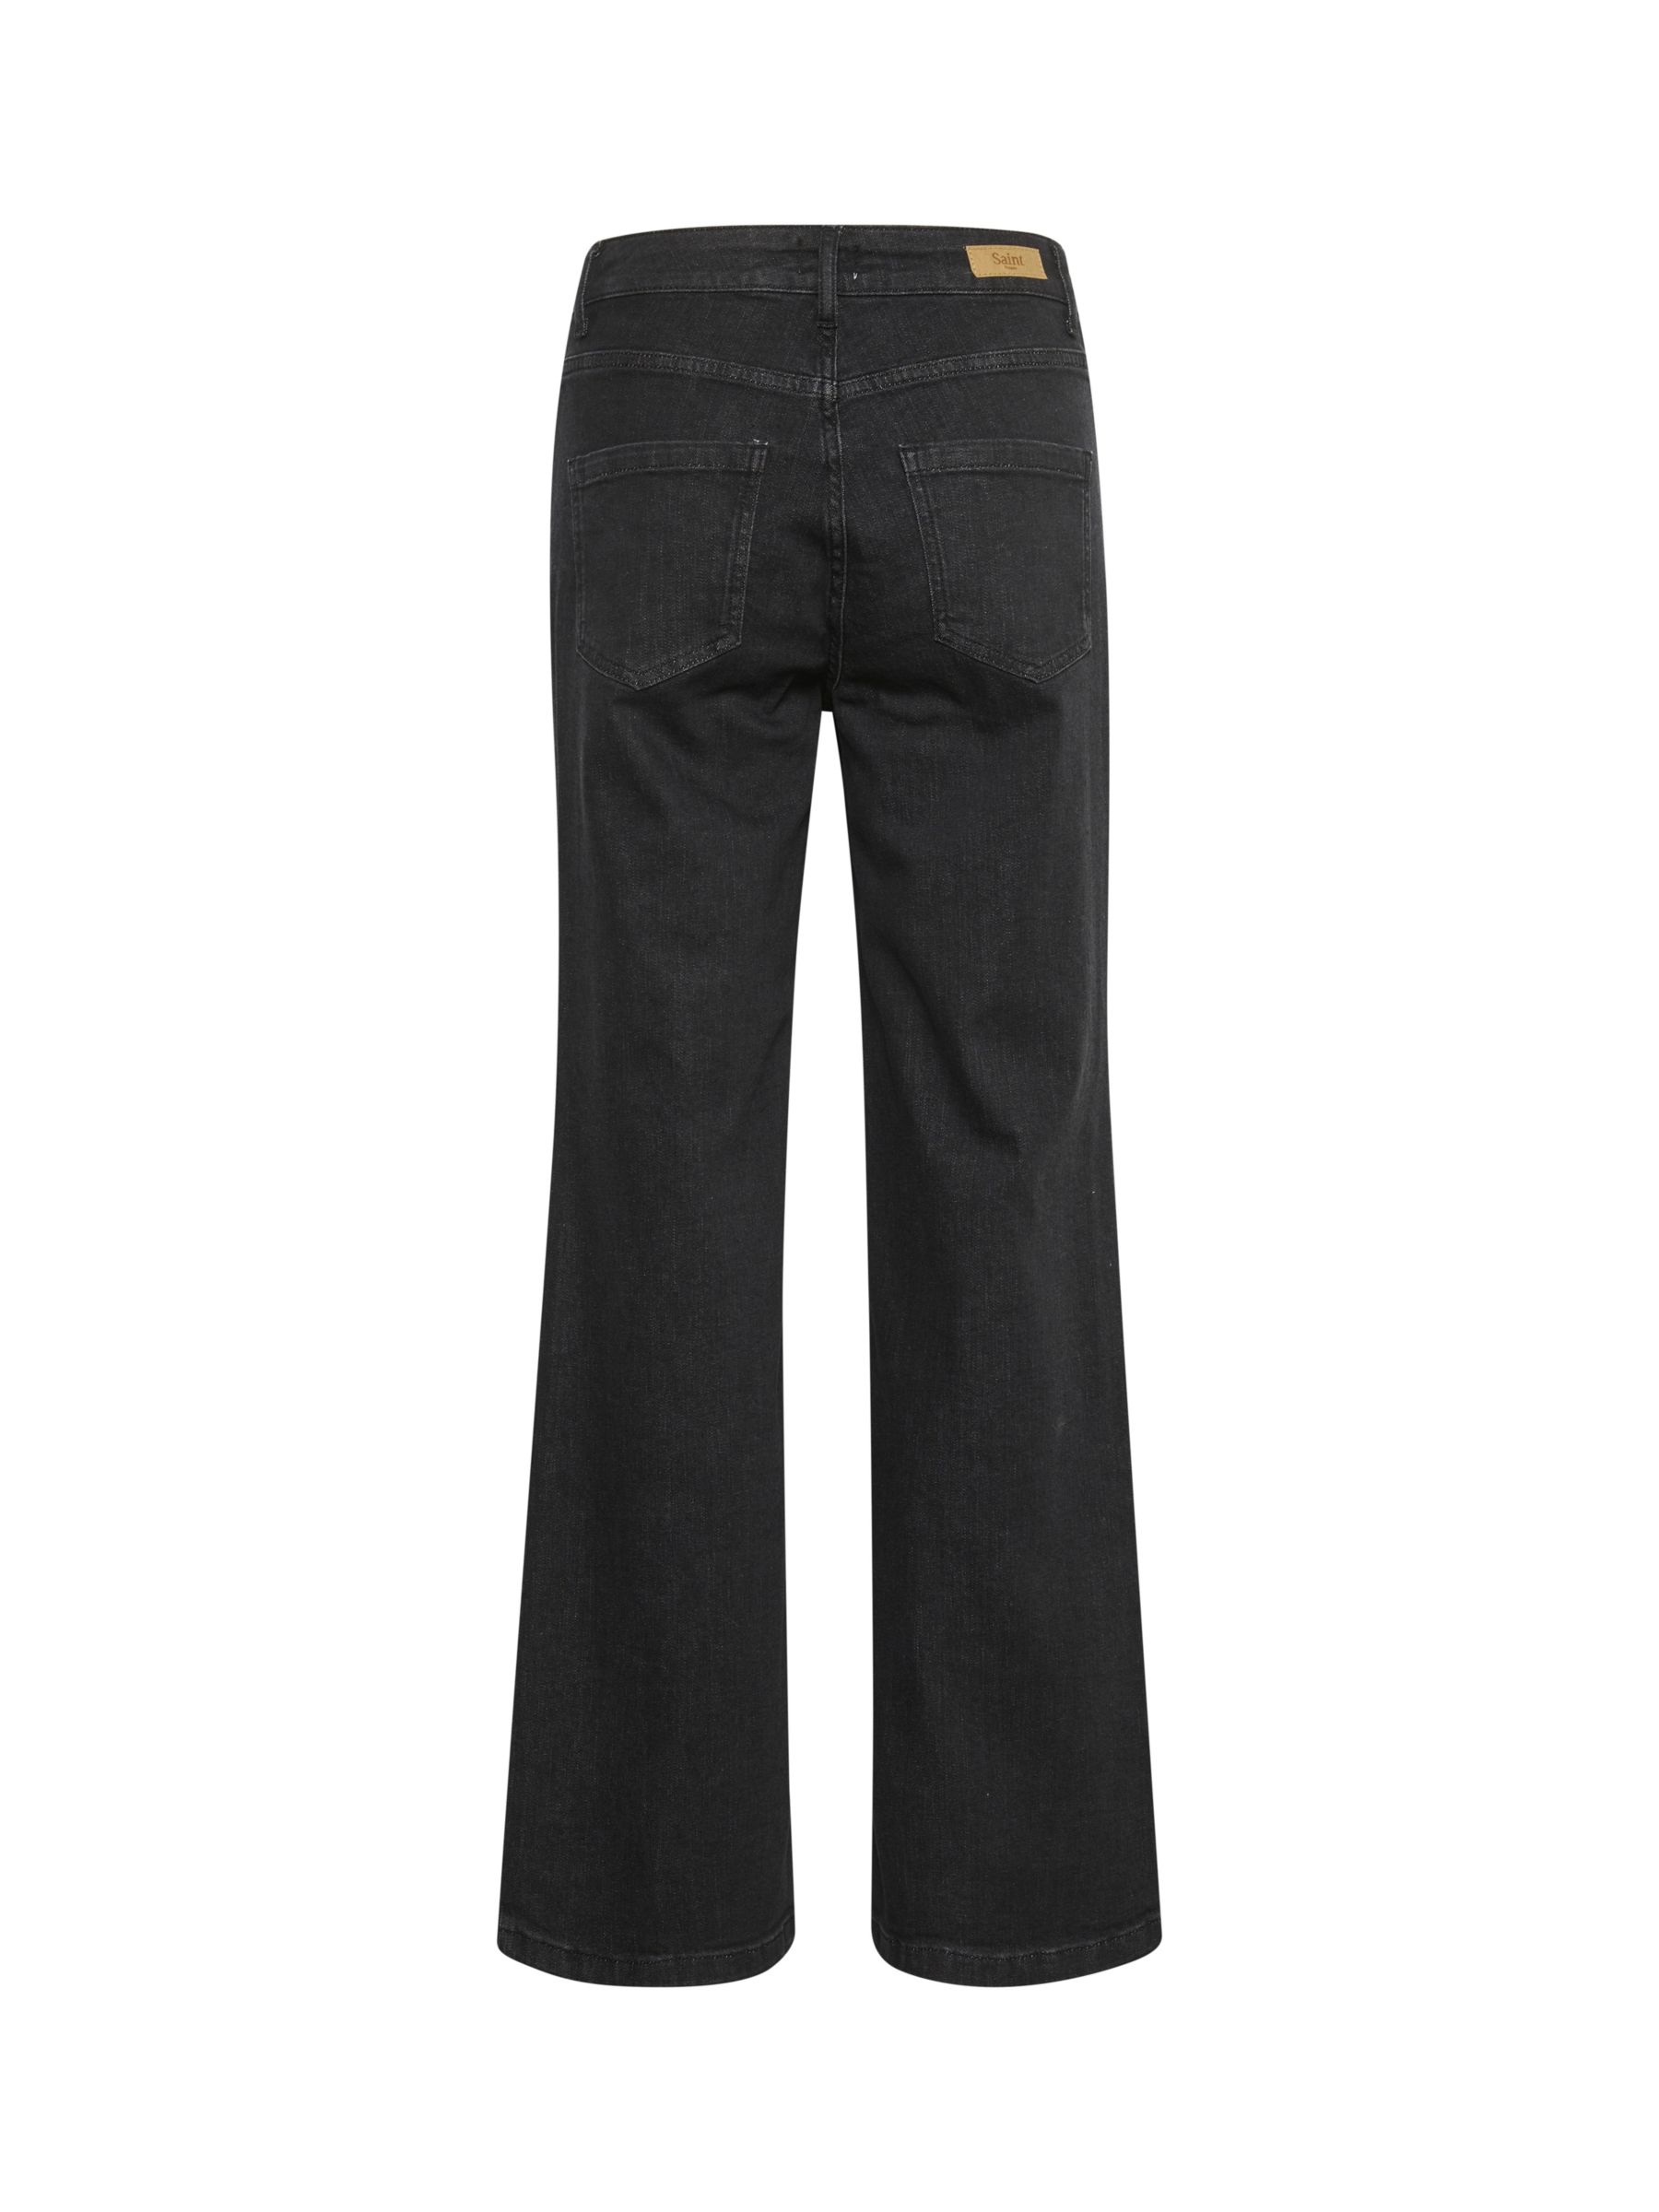 Saint Tropez Holly Flared Regular Waist Jeans, Black, 29L